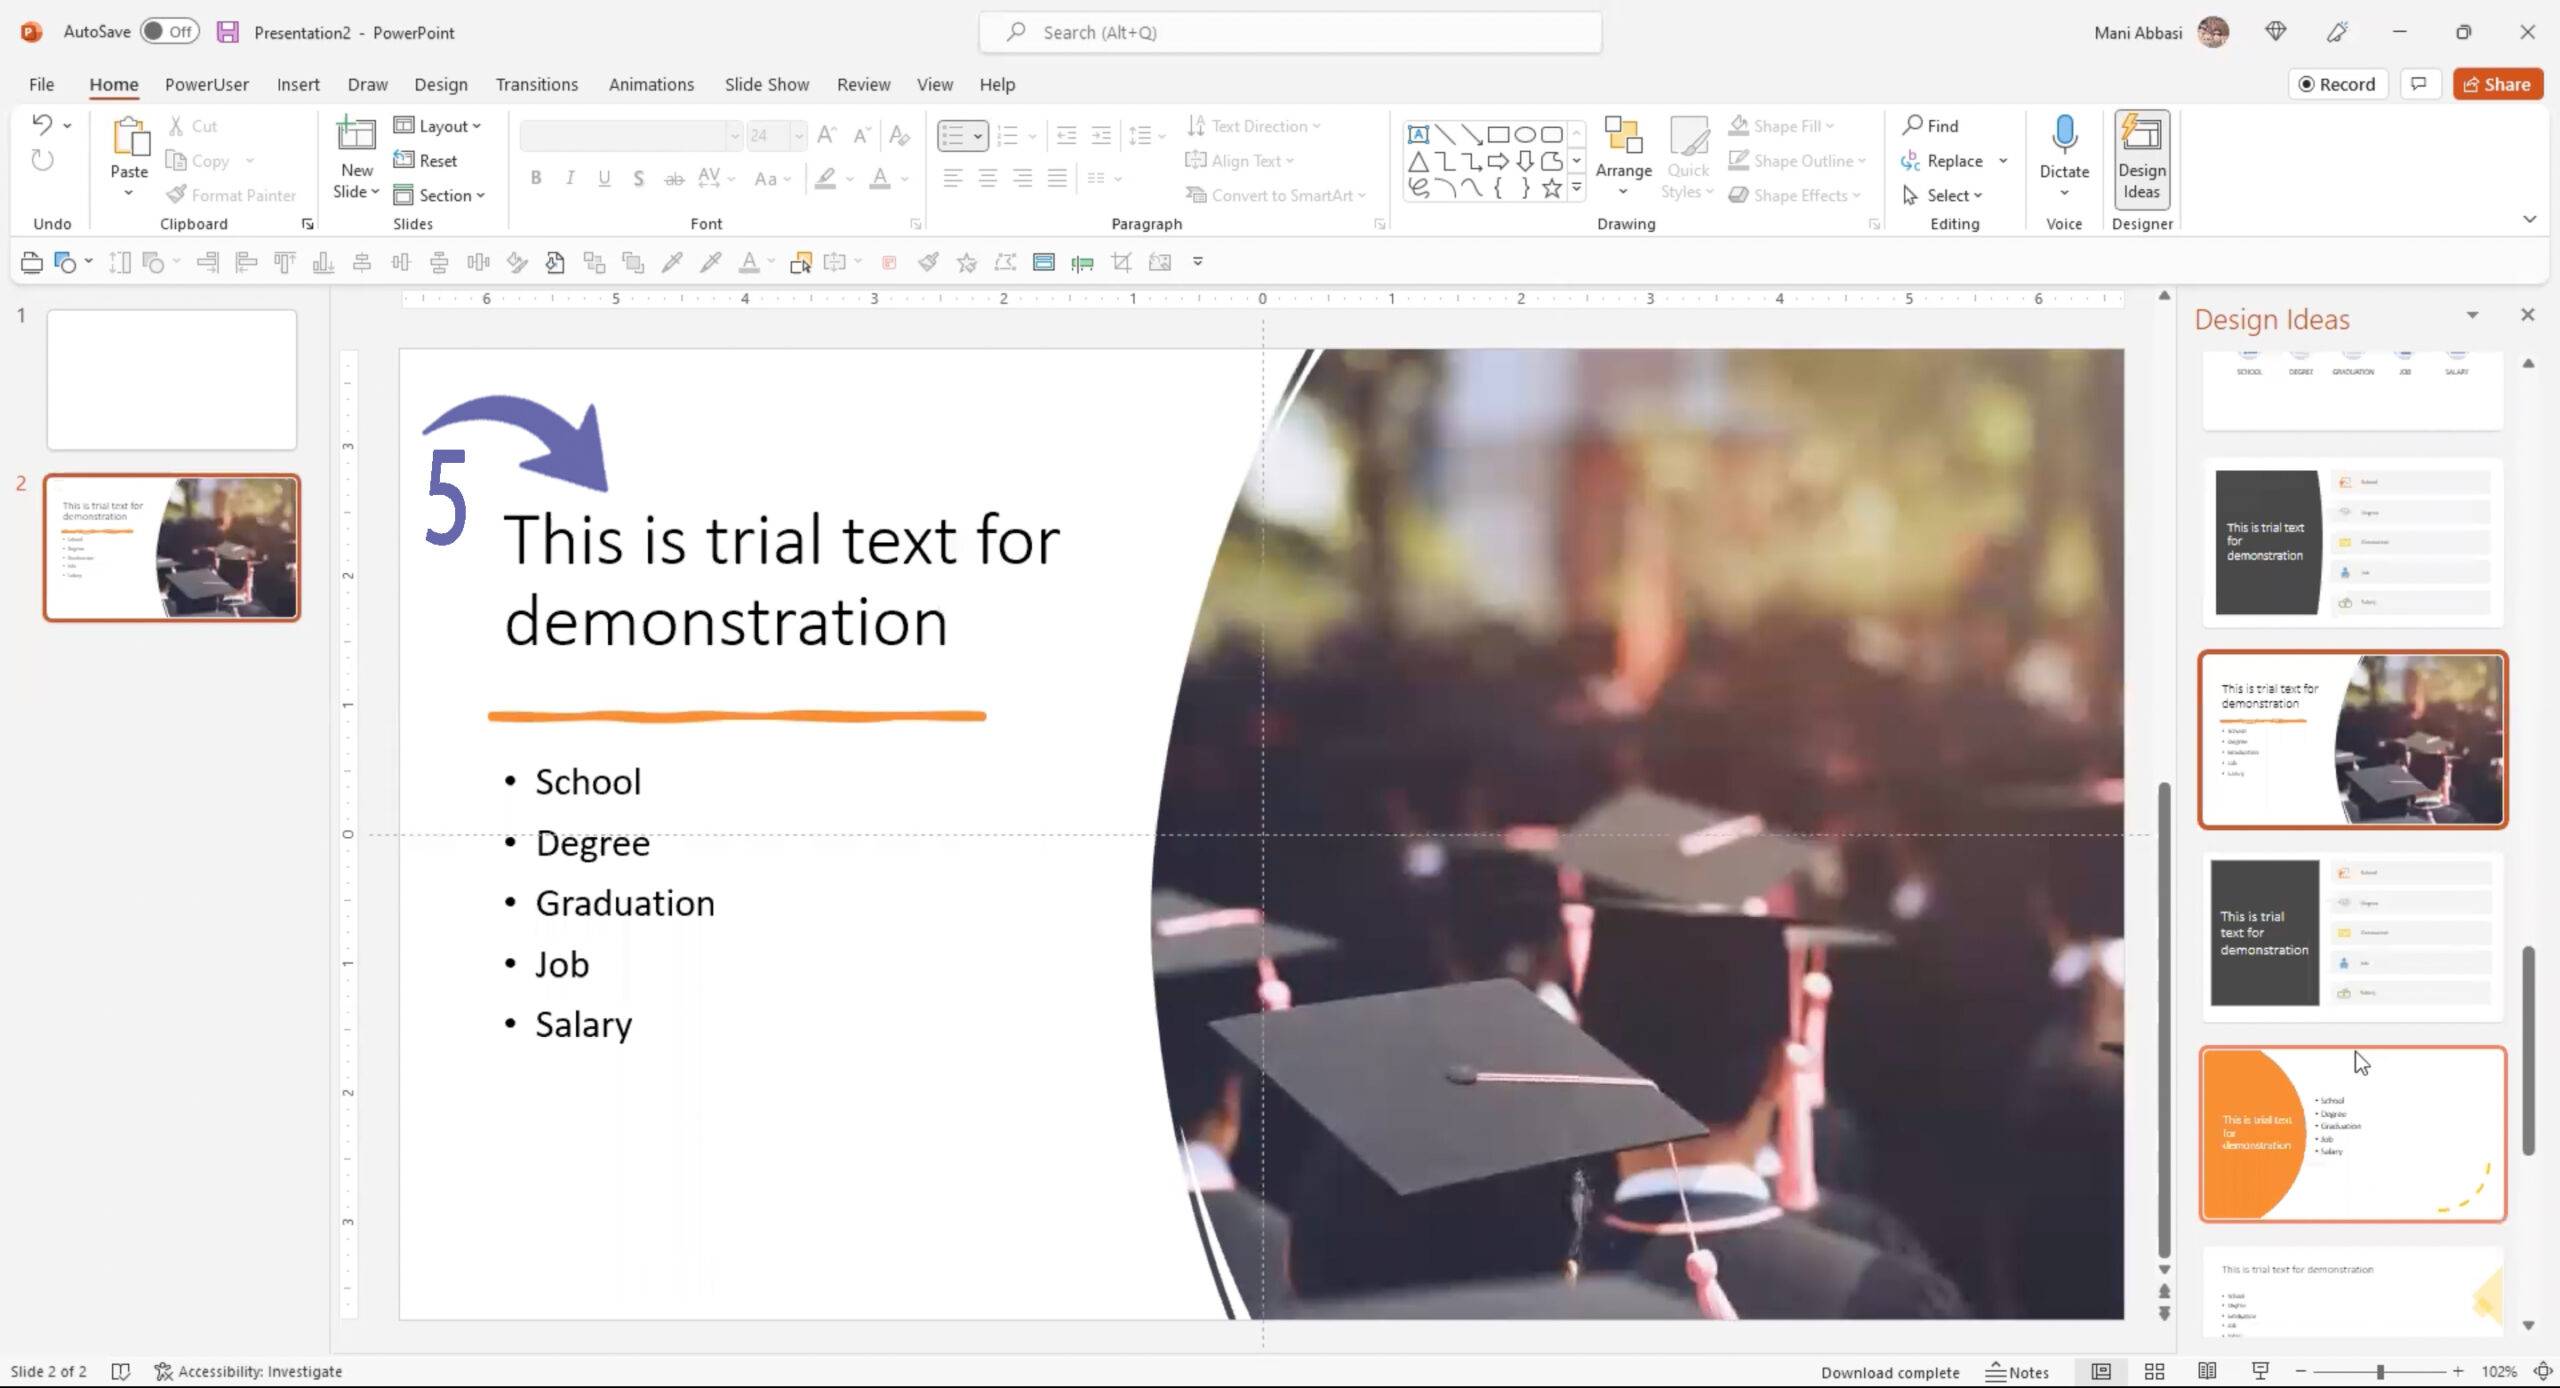 Applying slide design ideas feature in PowerPoint